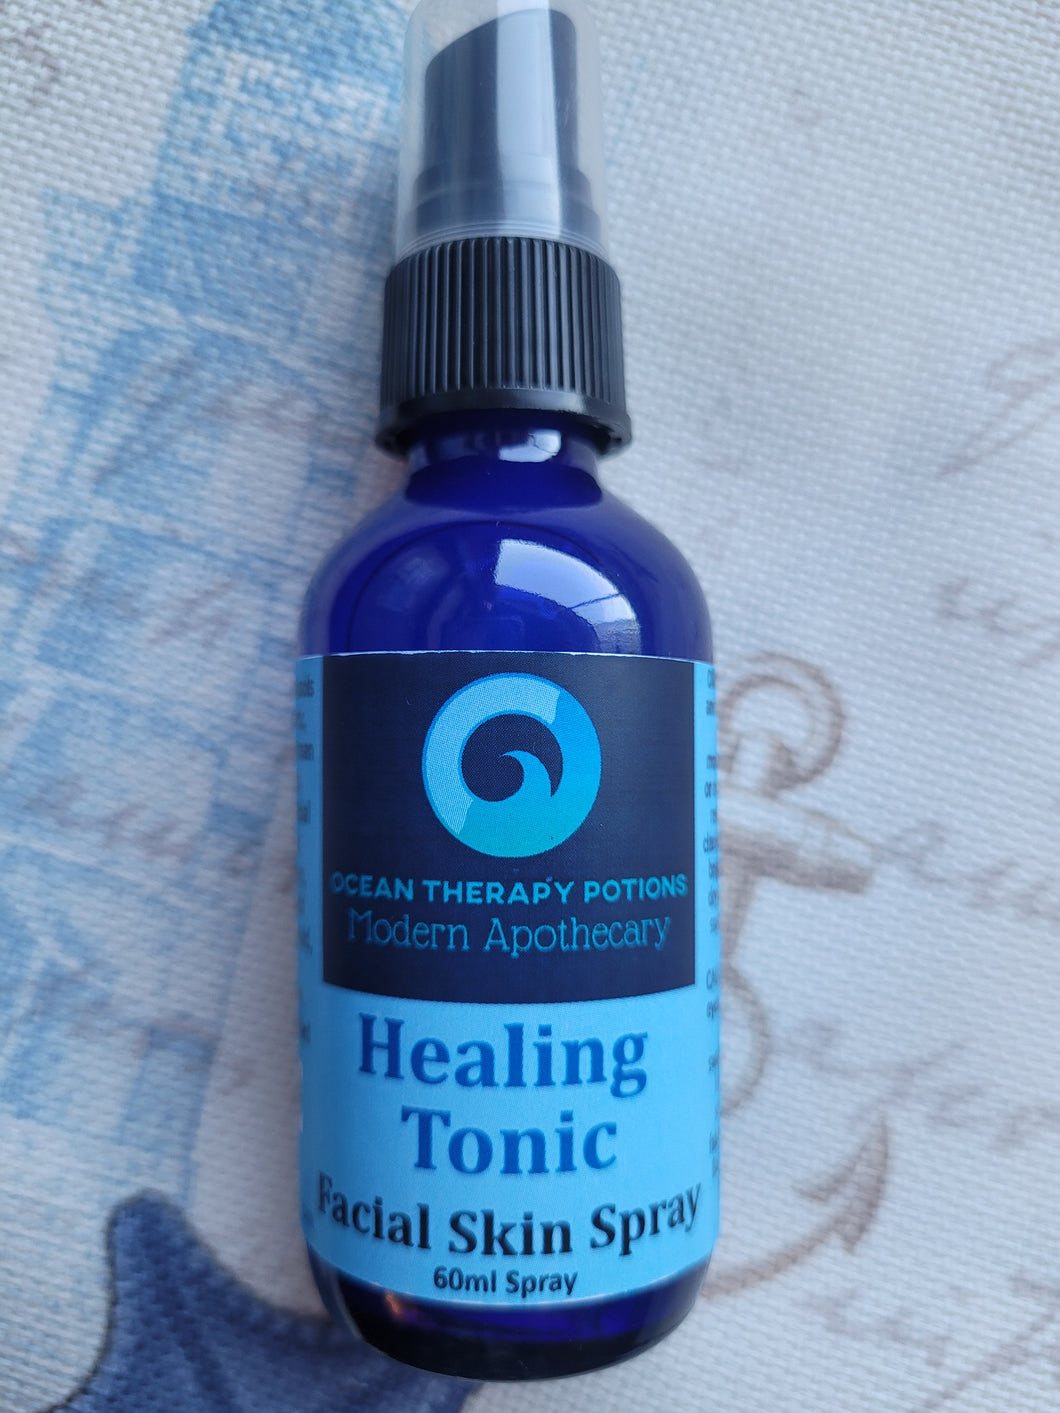 Healing Tonic Facial Skin Spray